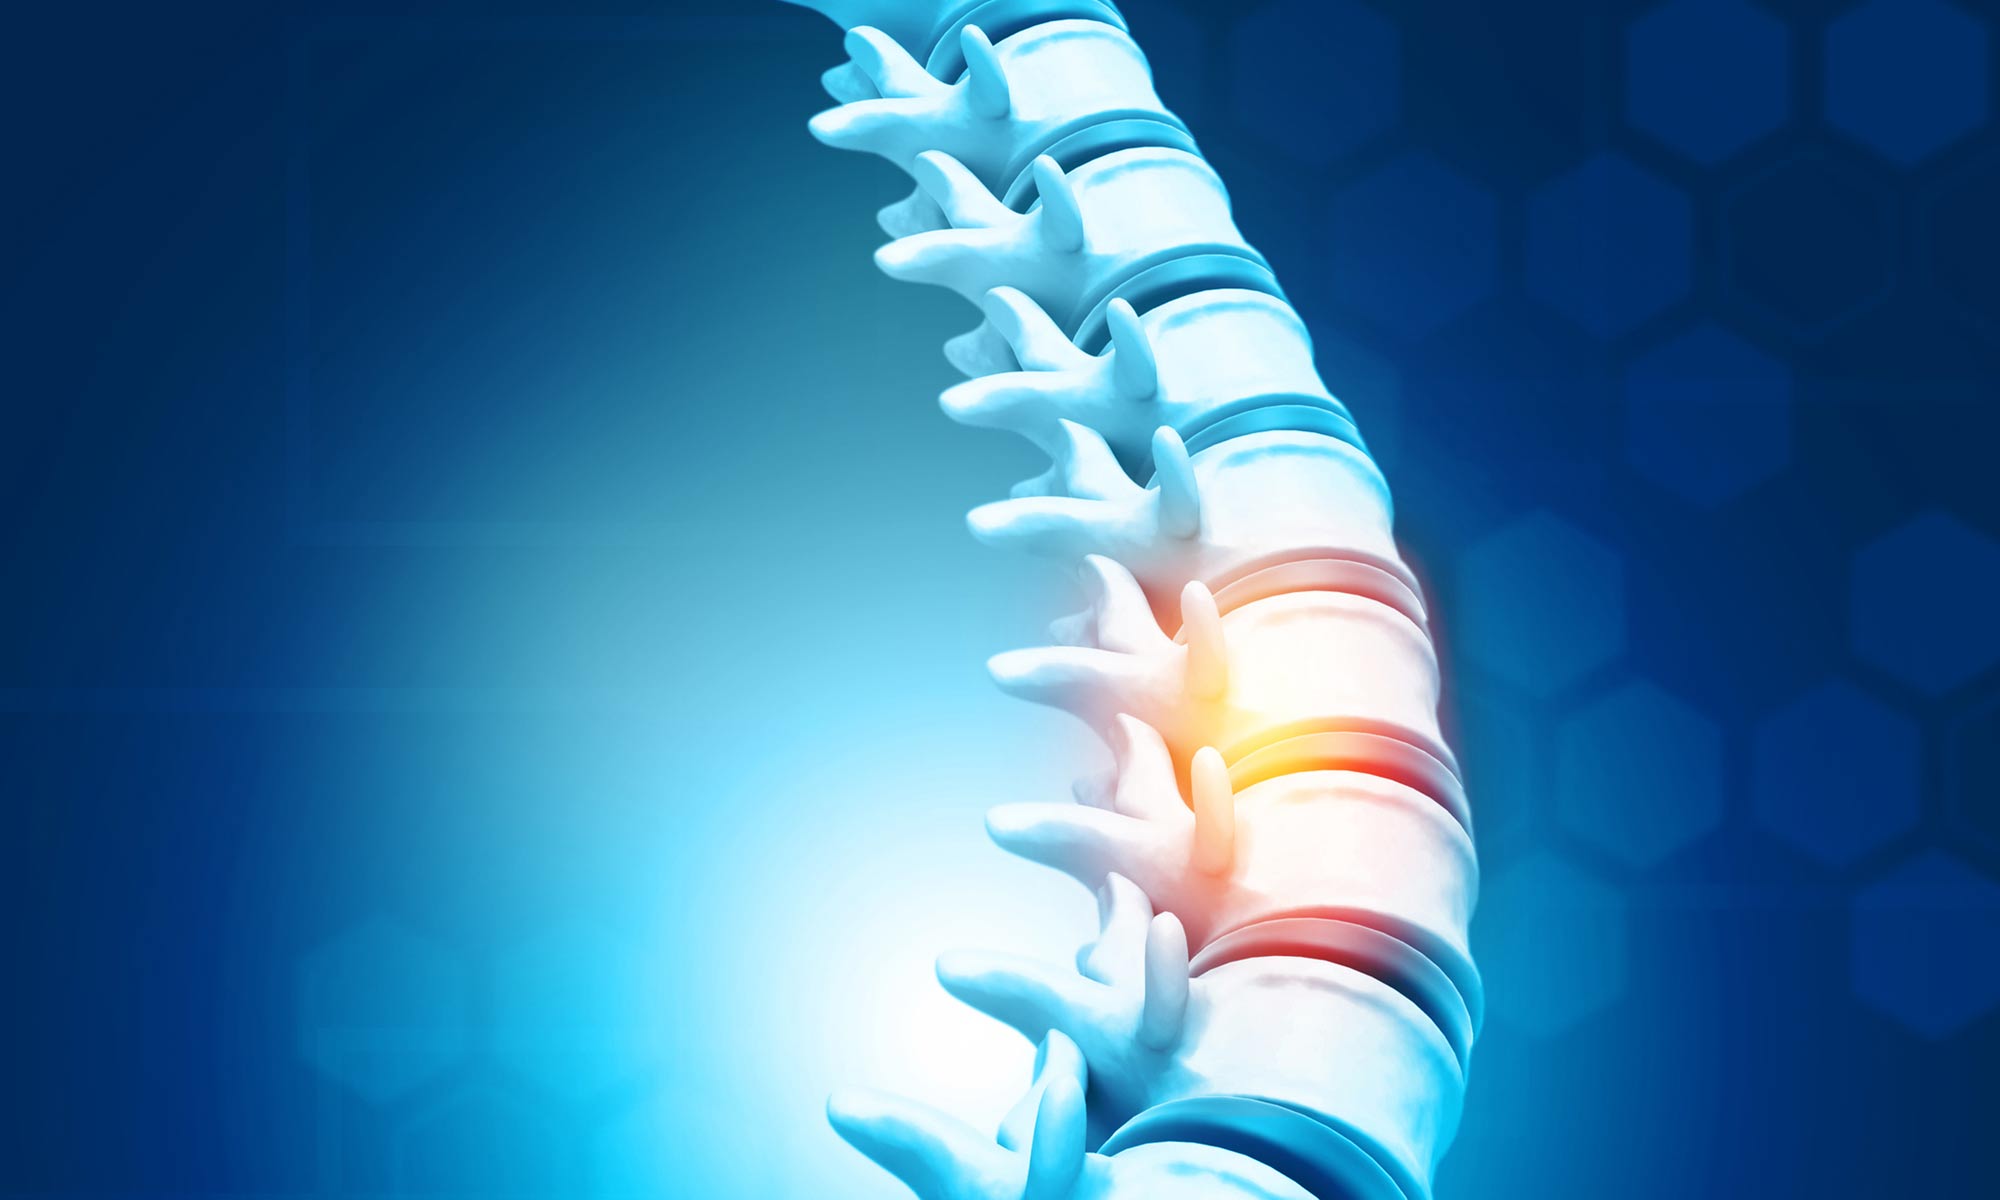 Spinal cord injury